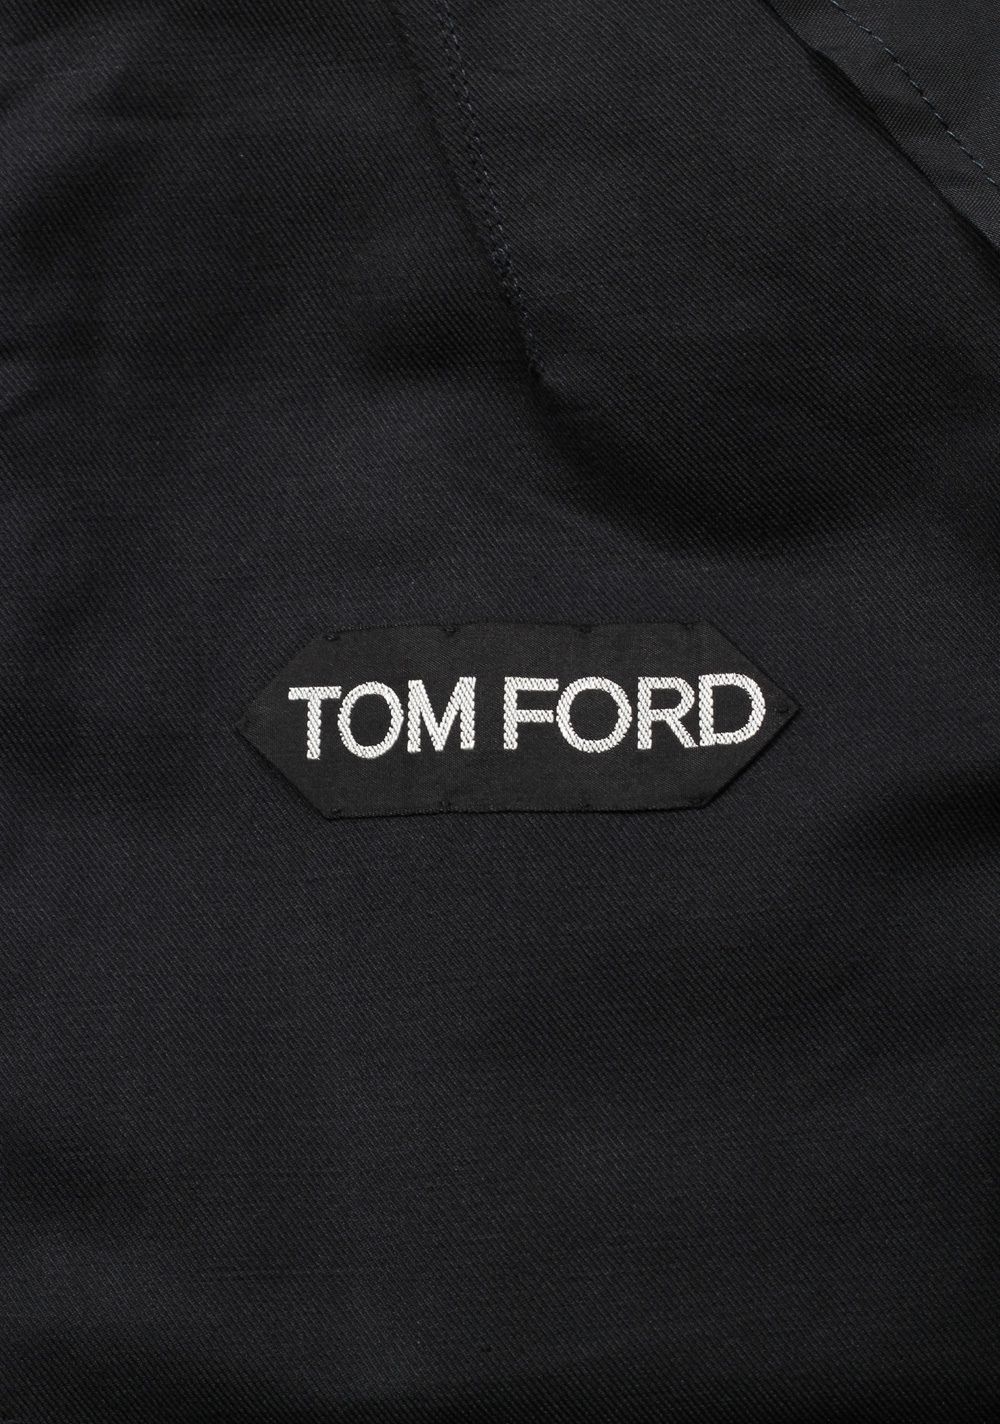 TOM FORD Black Blouson Jacket Coat Size 56 / 46R U.S. Outerwear ...